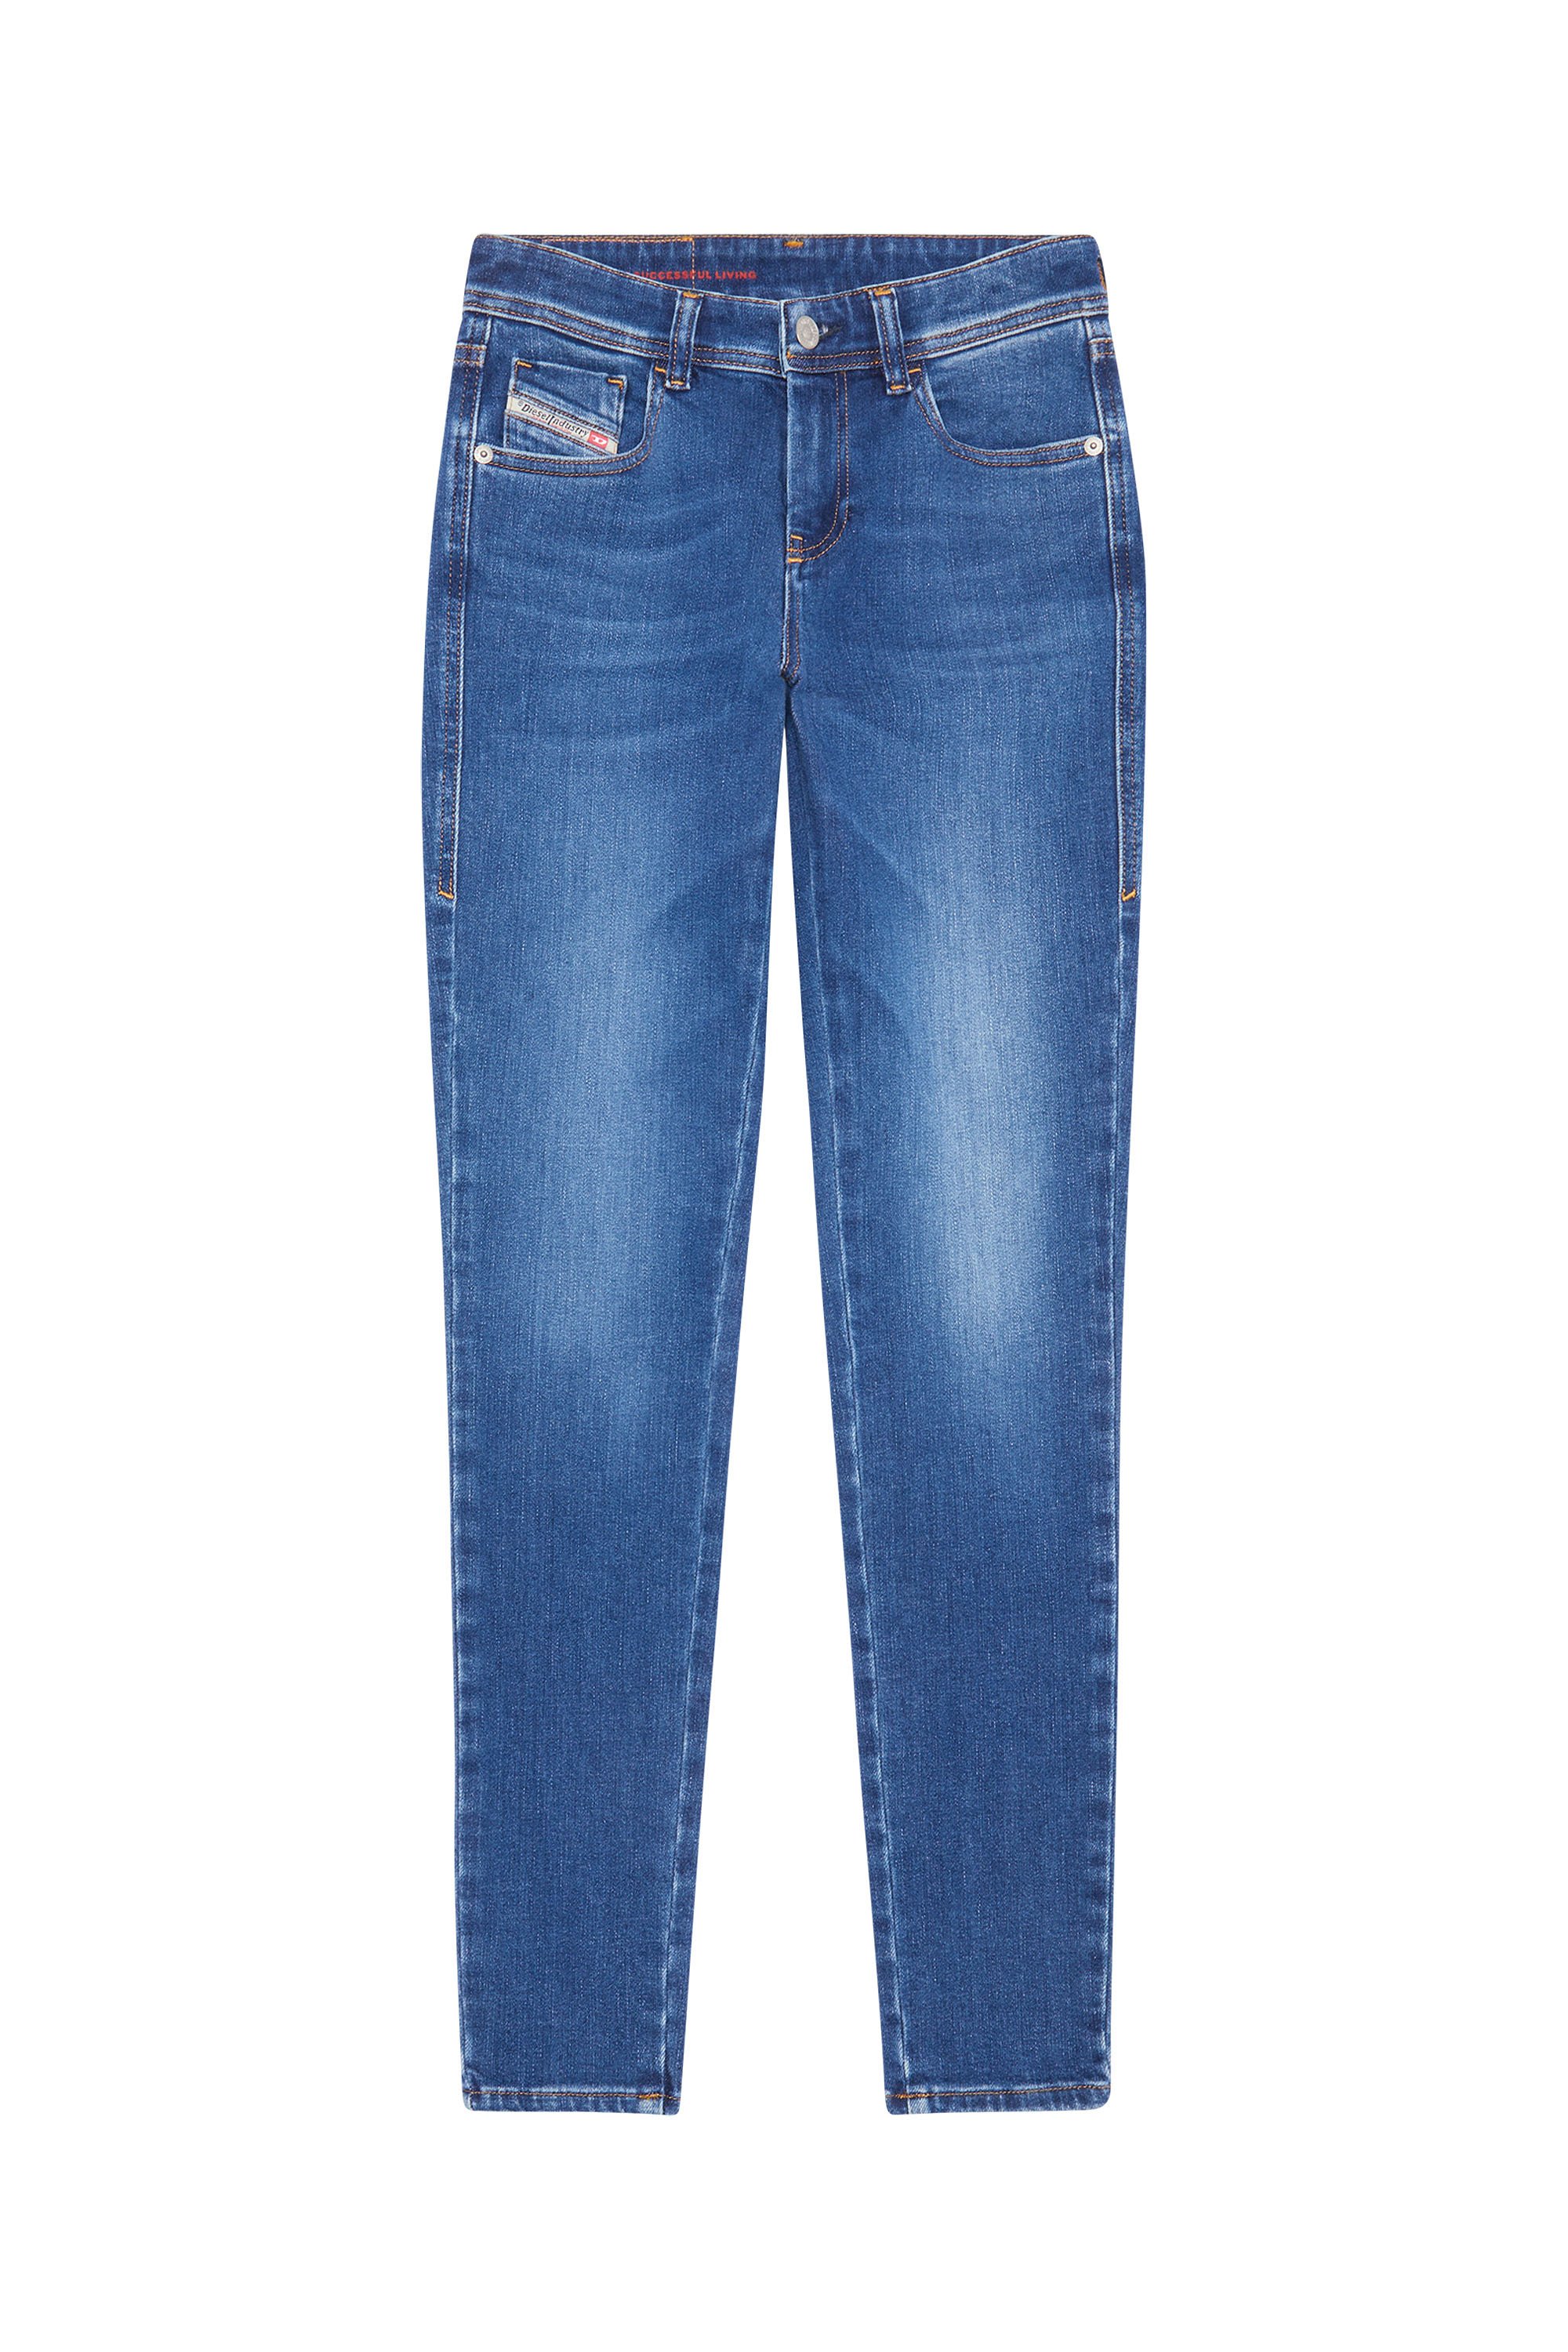 2017 SLANDY 09C21 Super skinny Jeans, Azul medio - Vaqueros